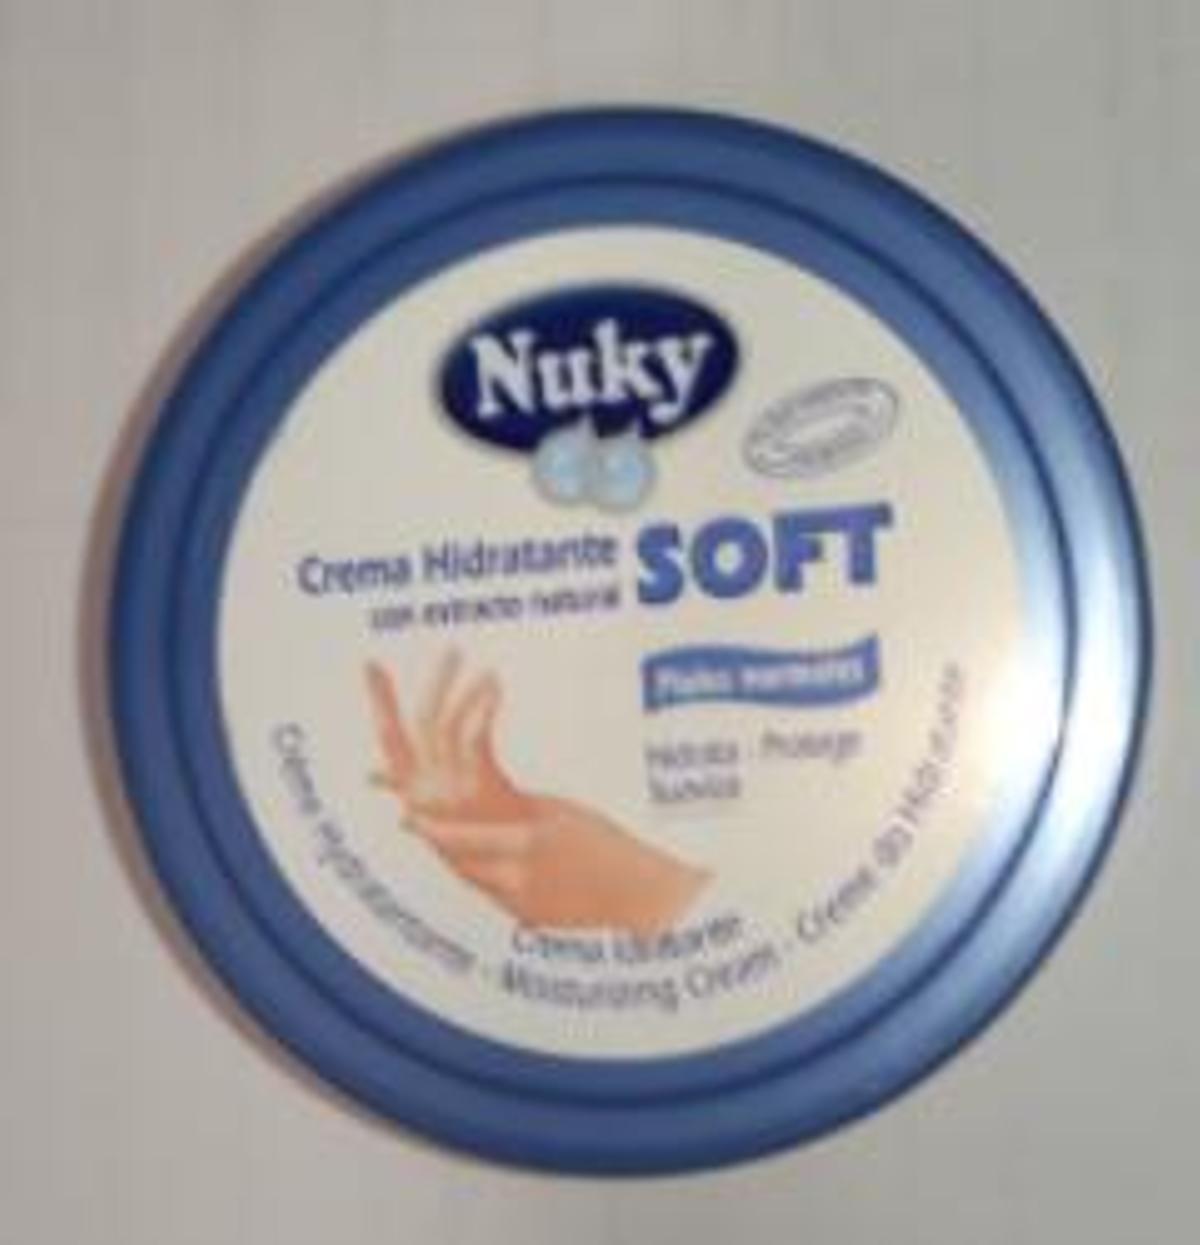 Crema hidratant Nuky Soft